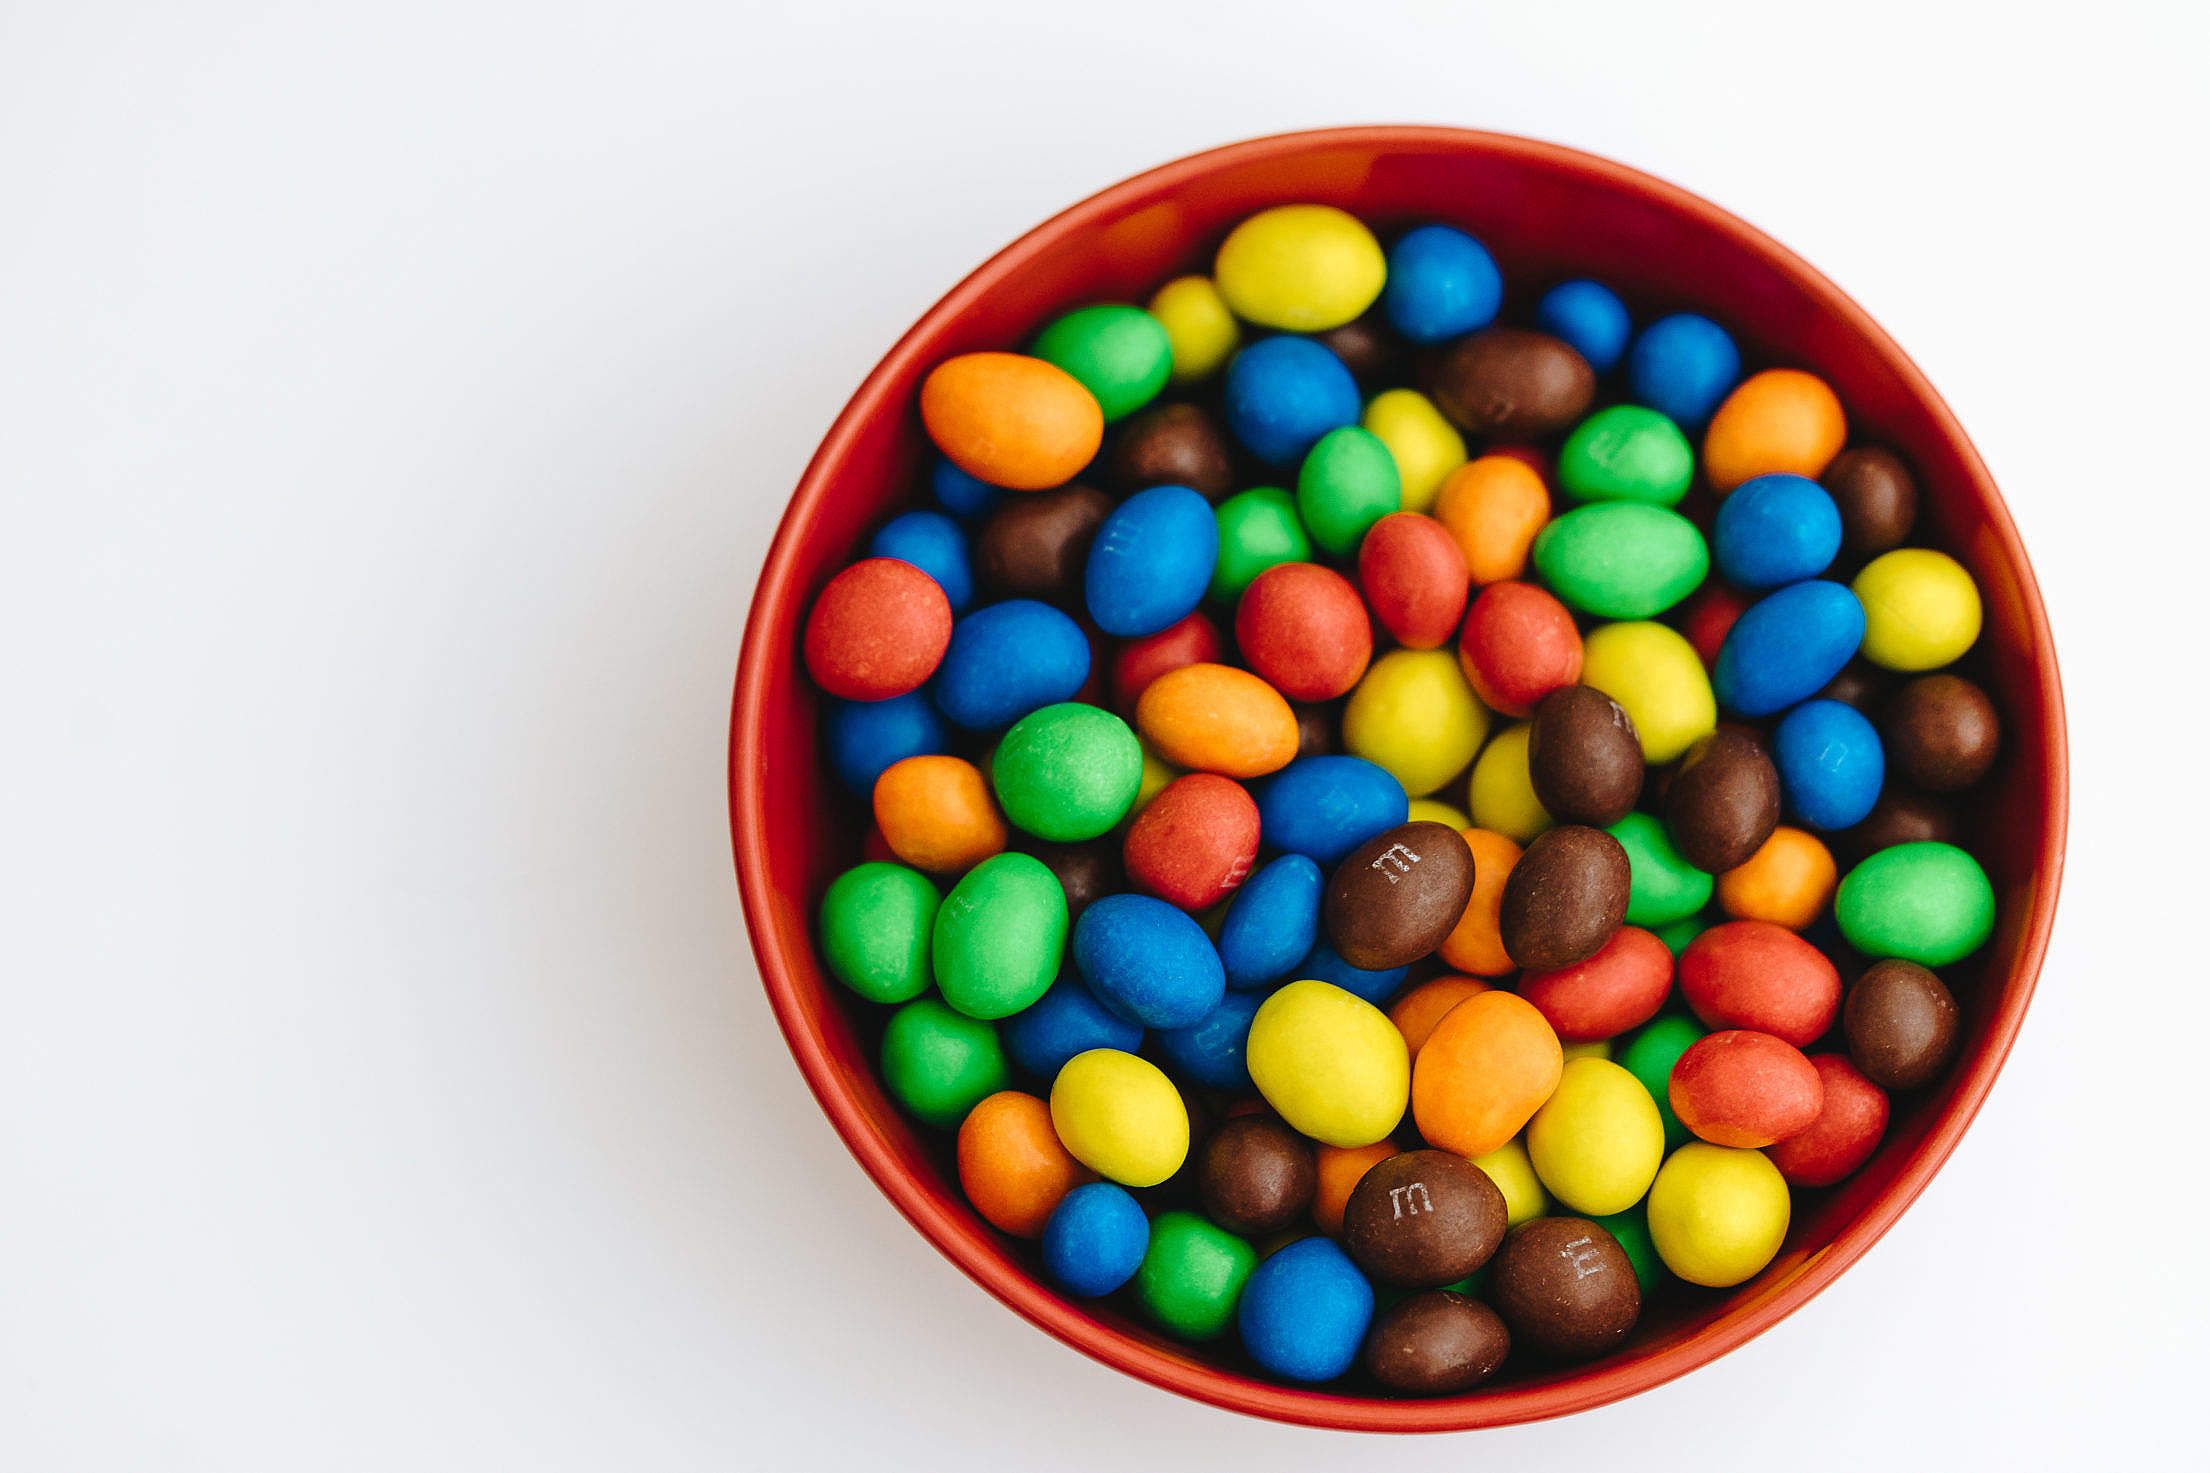 Yummy & Colorful Peanut Chocolates Free Stock Photo